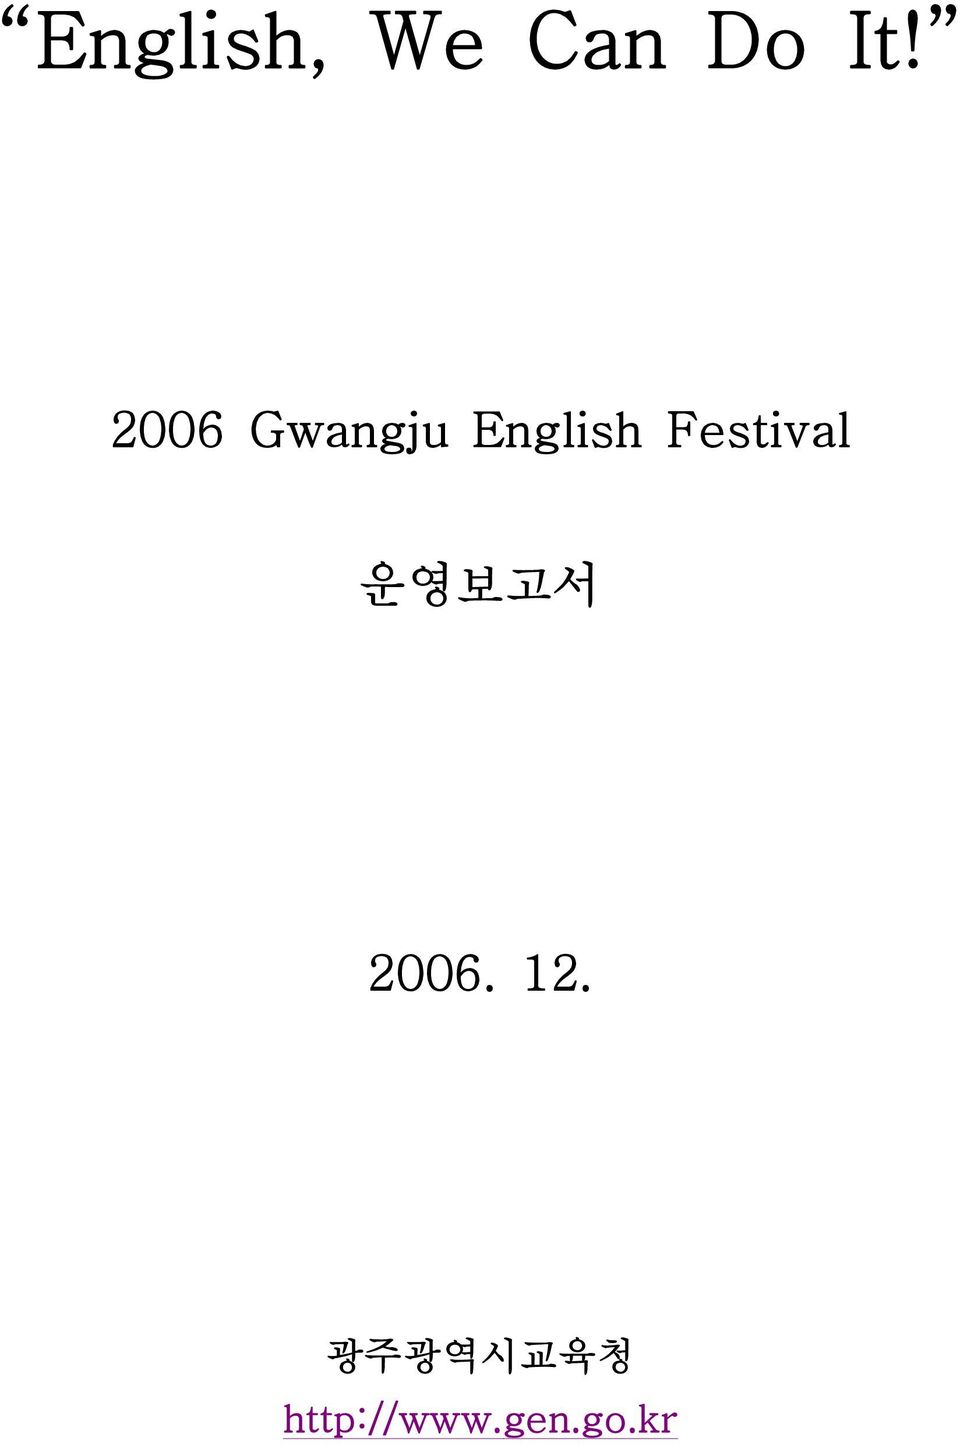 Festival 운영보고서 2006. 12.